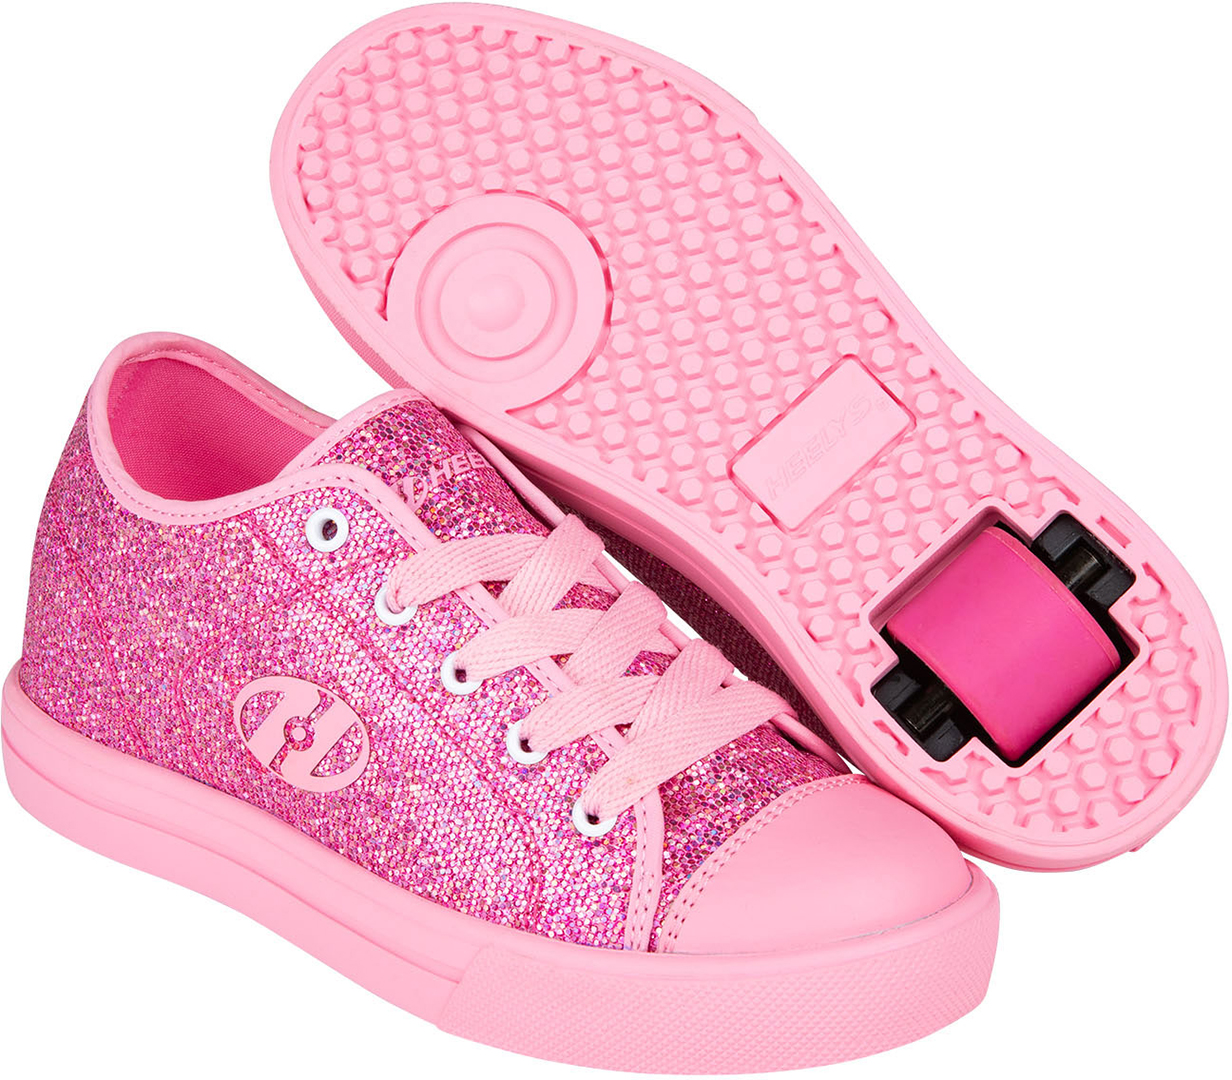 HEELYS Rollschuhe Schuhe mit Rollen CLASSIC EM Schuh pastel pinkpink Schuhe mit